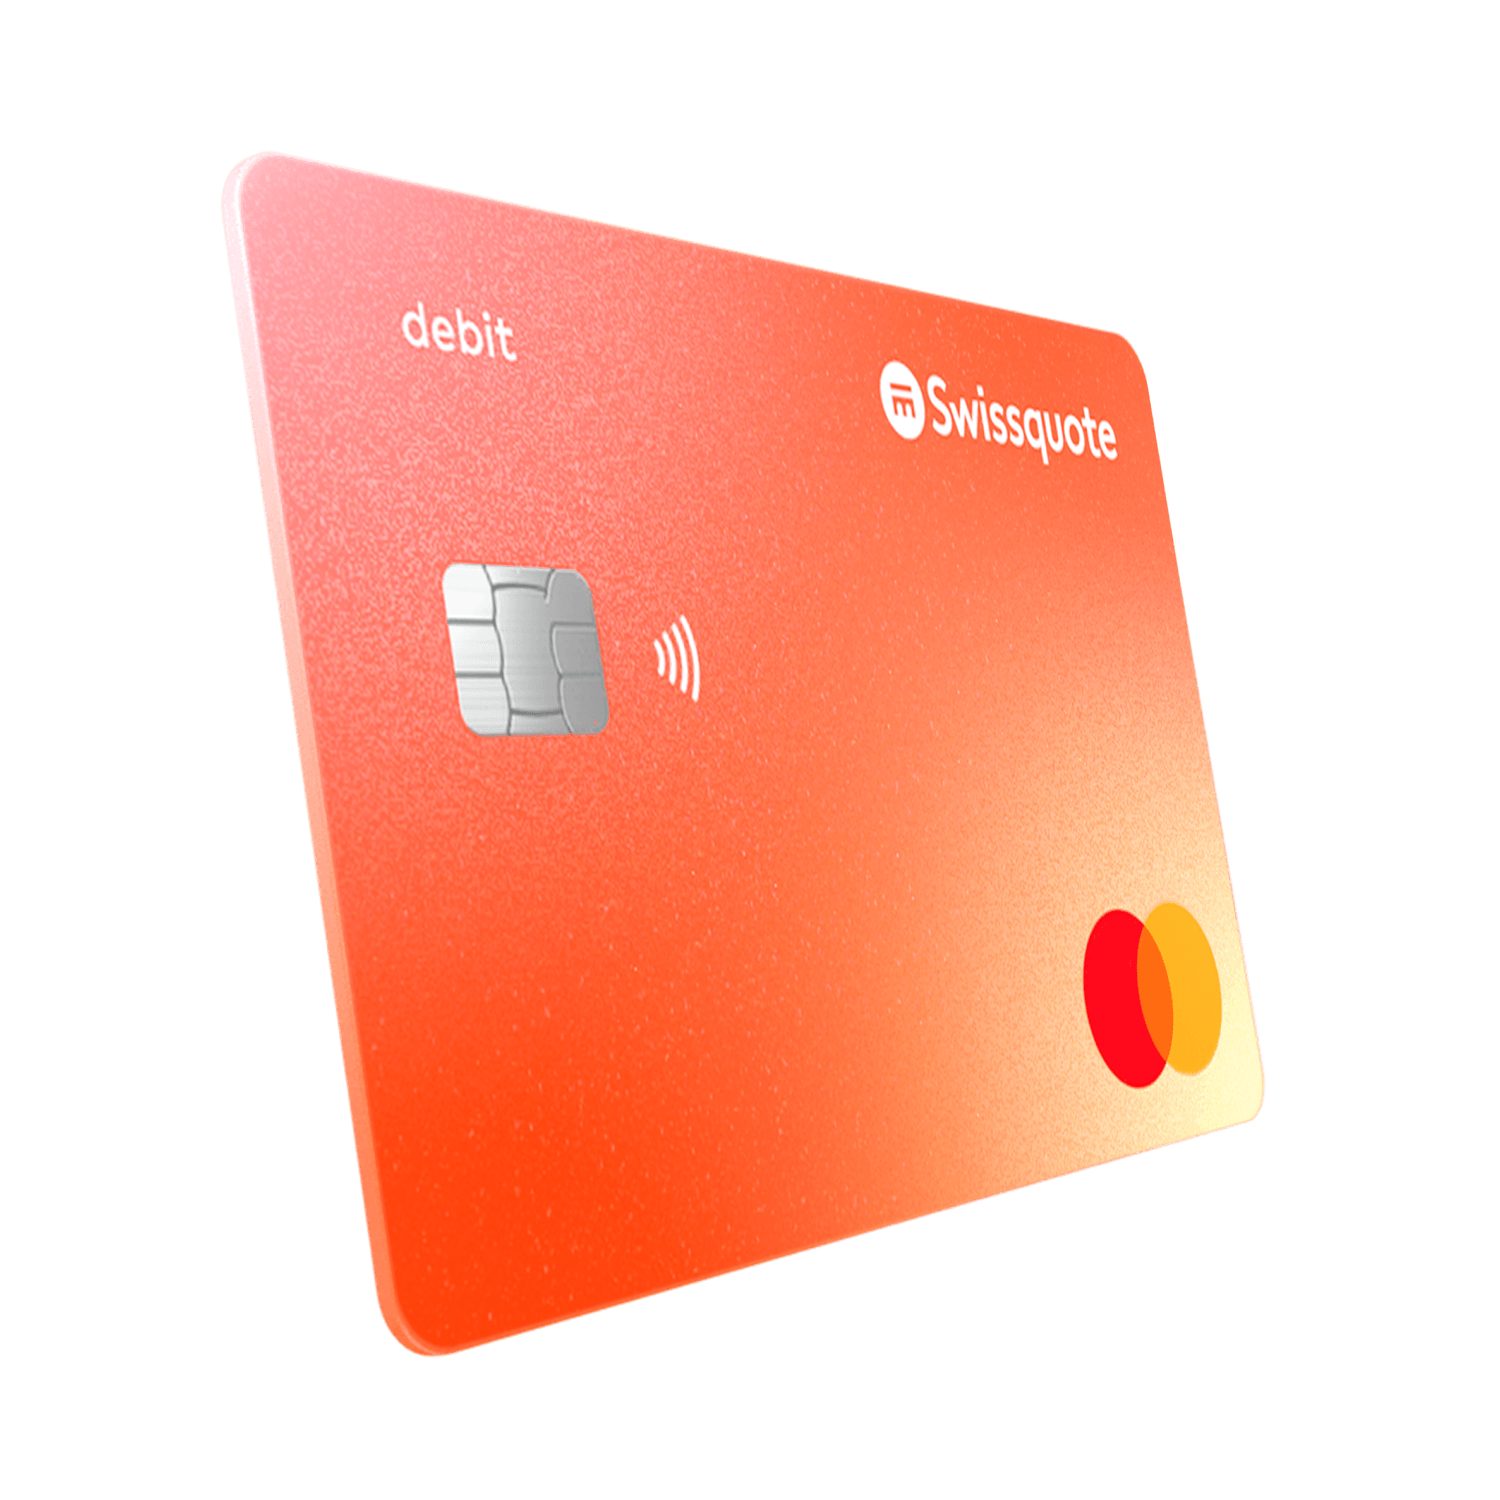 Swissquote debit card